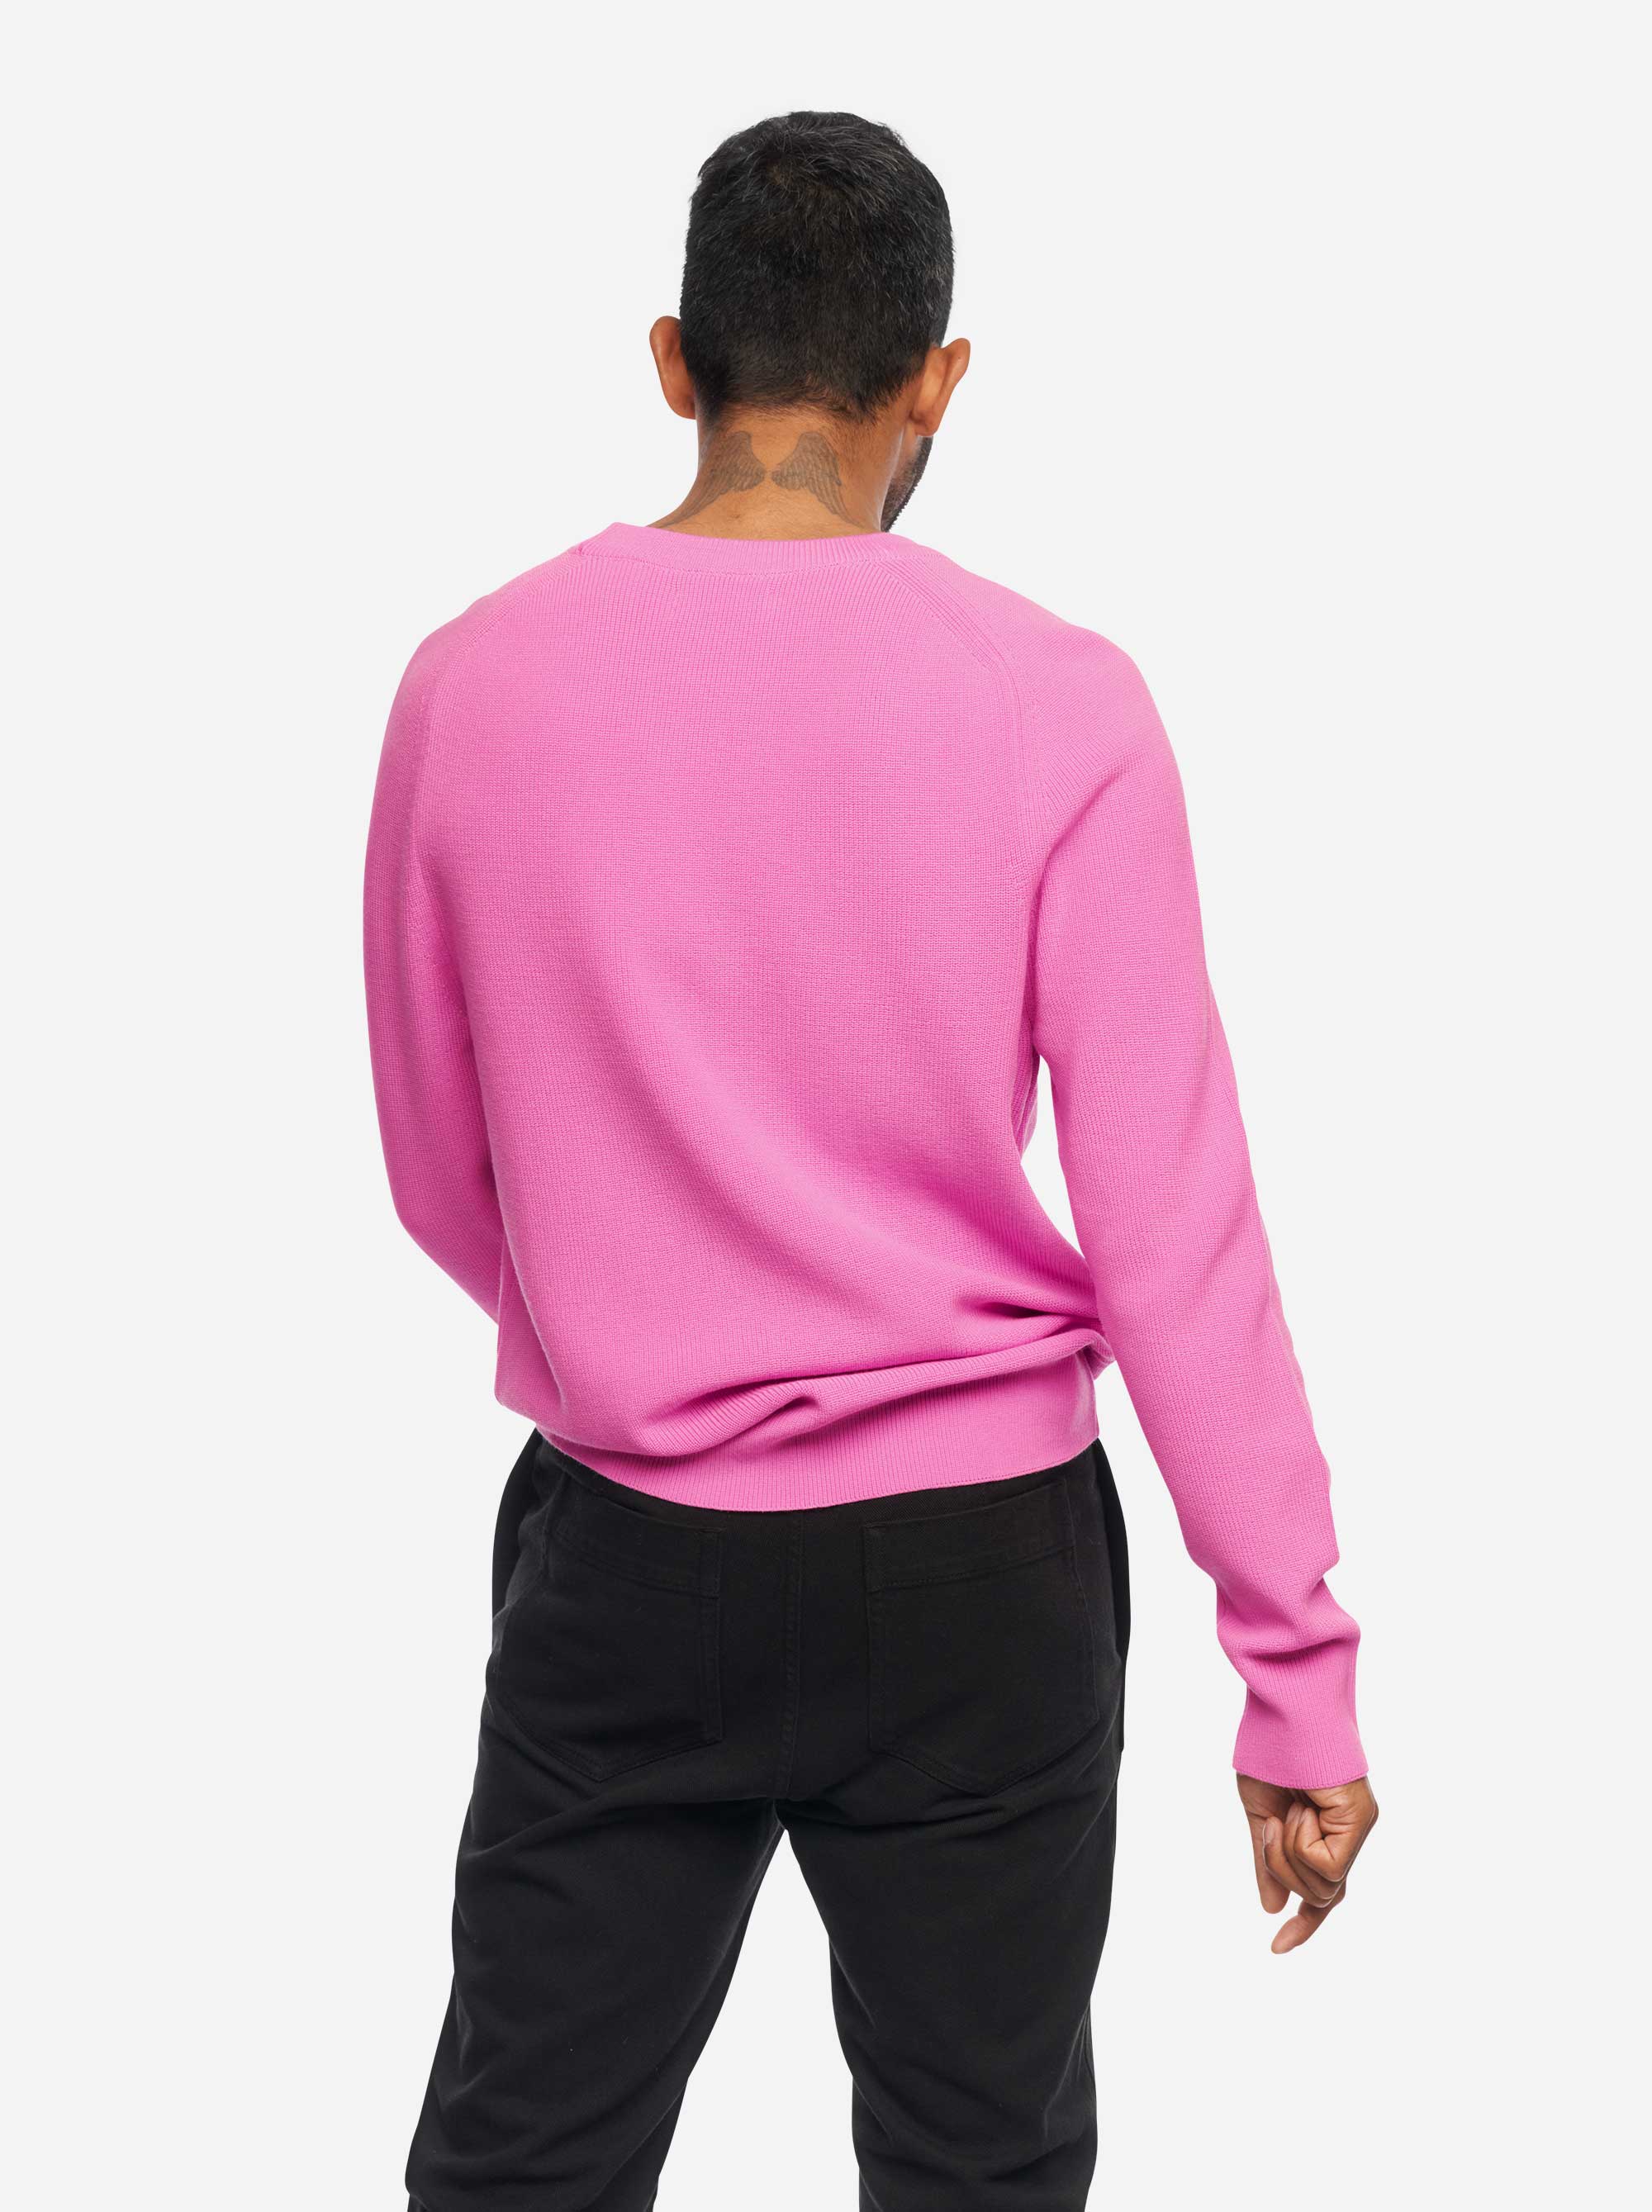 Teym - The Merino Sweater - Crewneck - Men - Bright Pink - 3